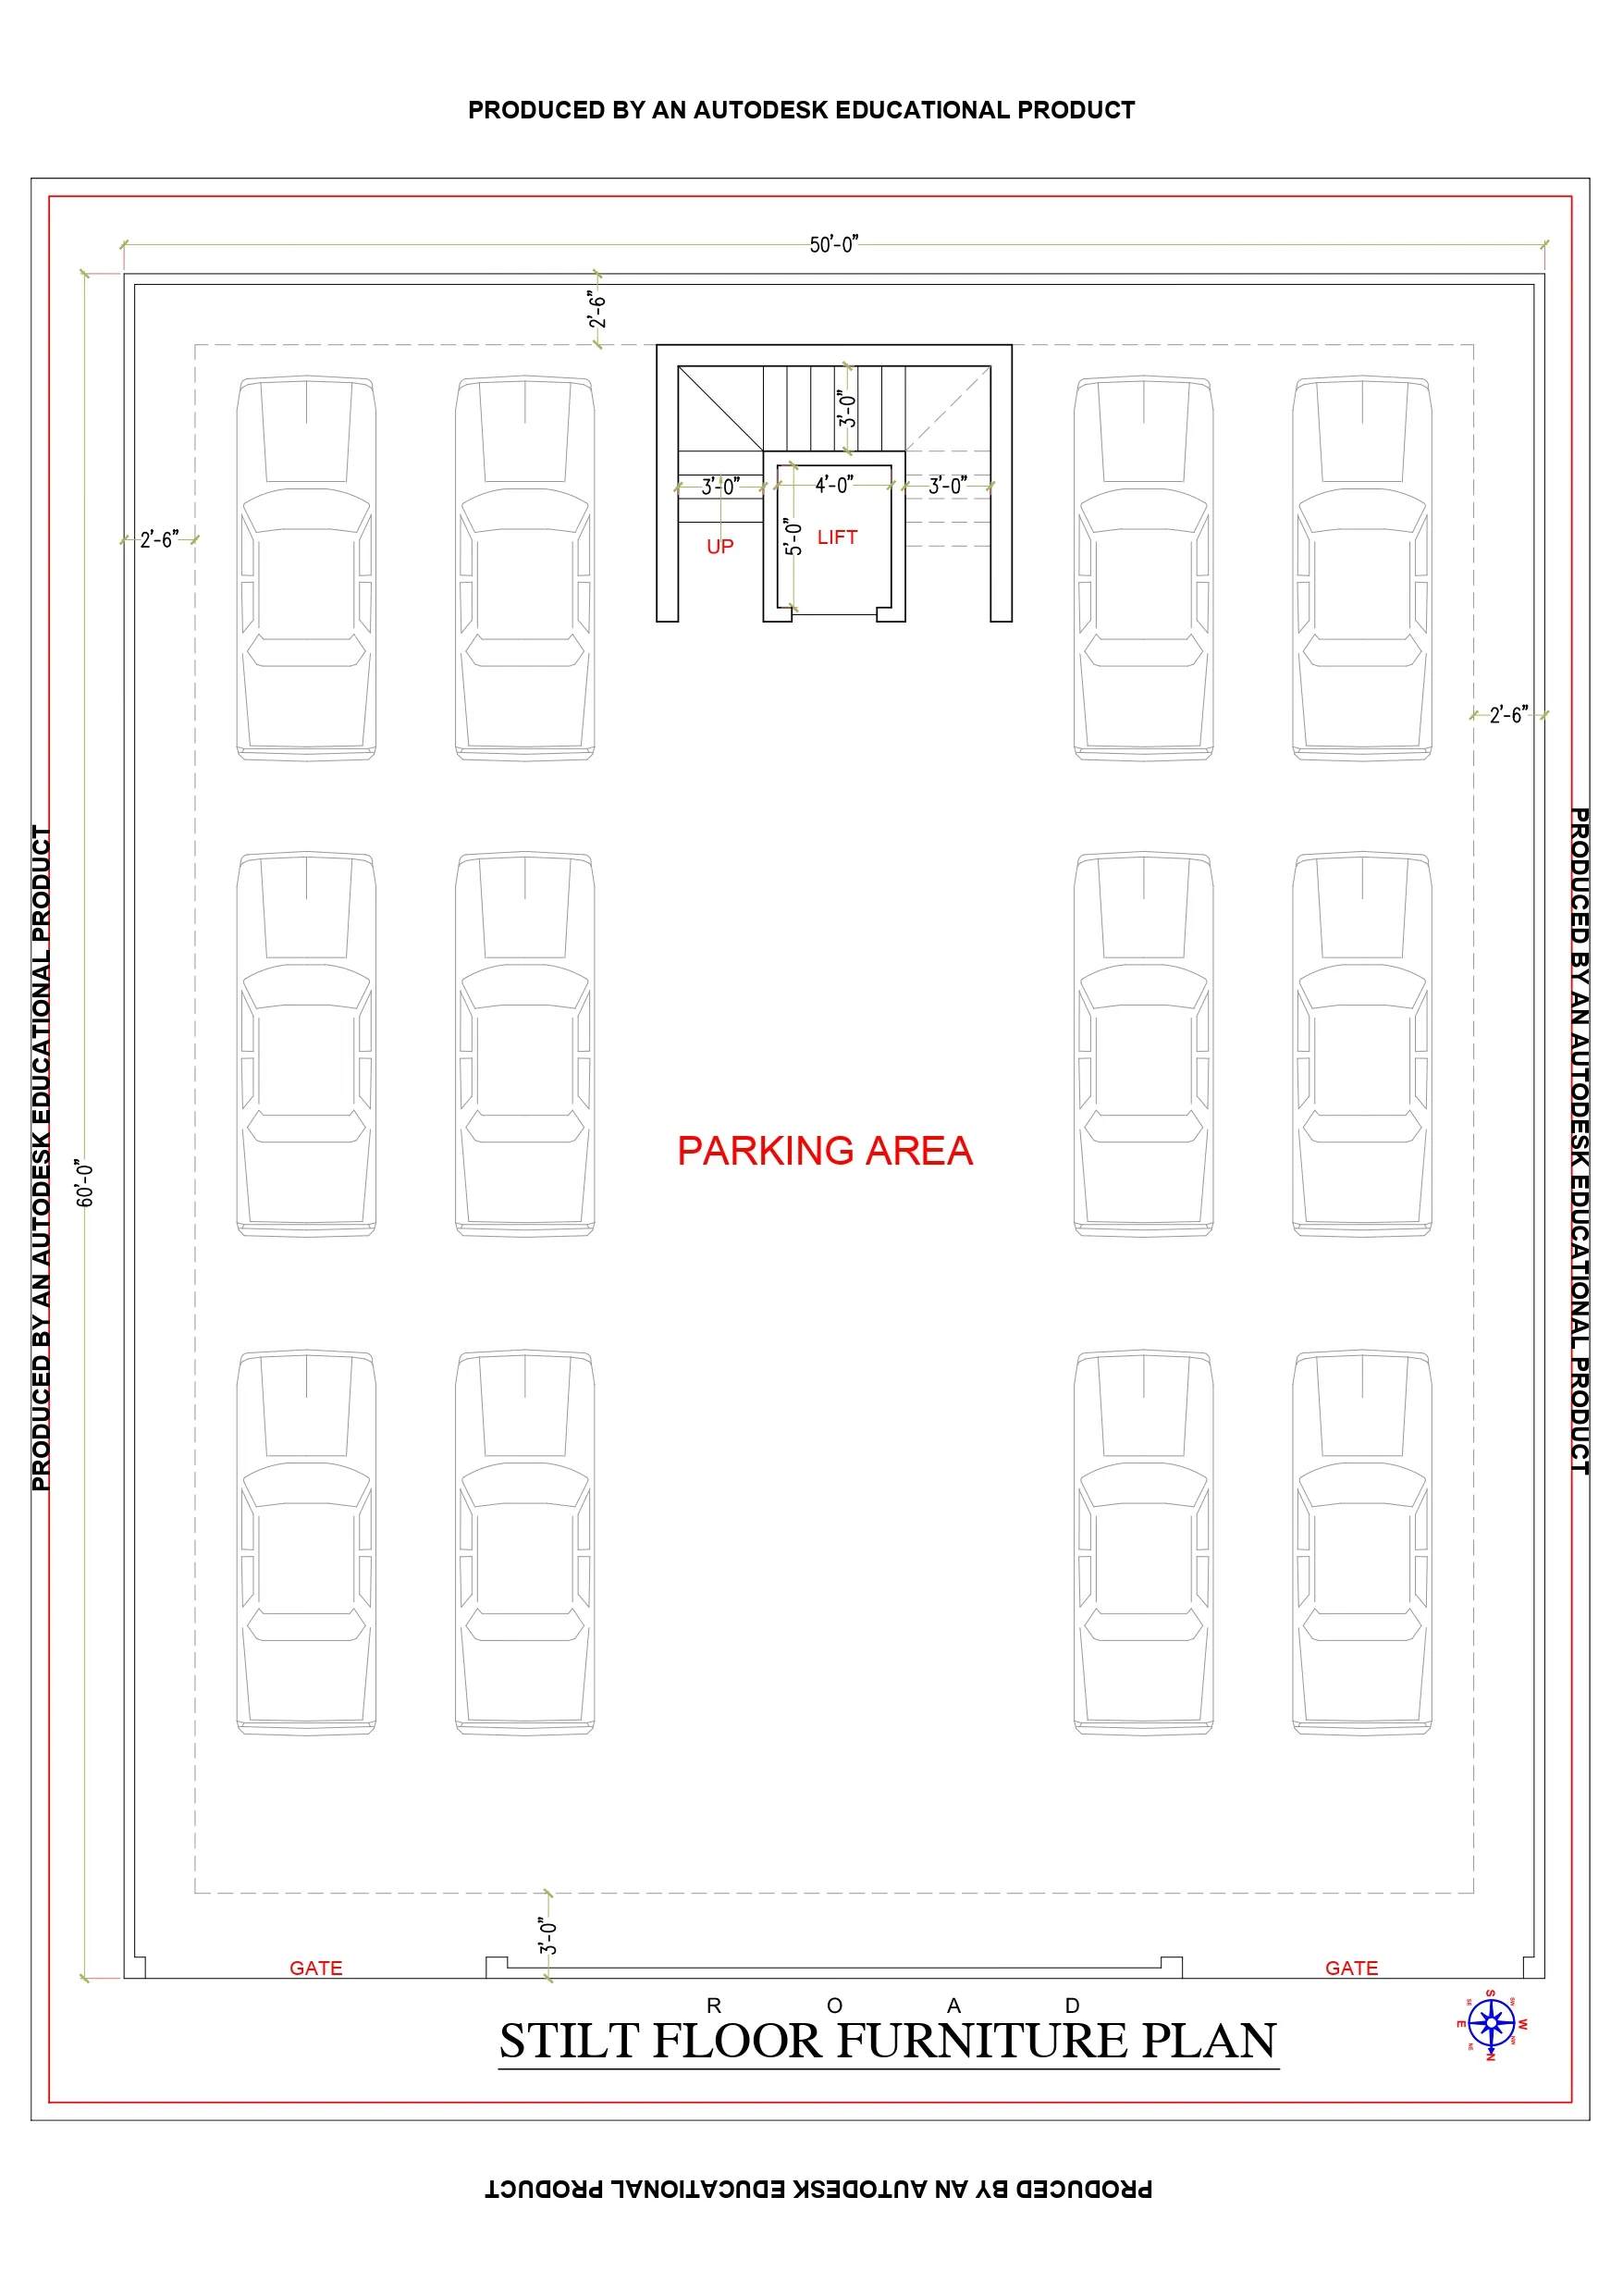 50x60sqft Apartment Floor Plan